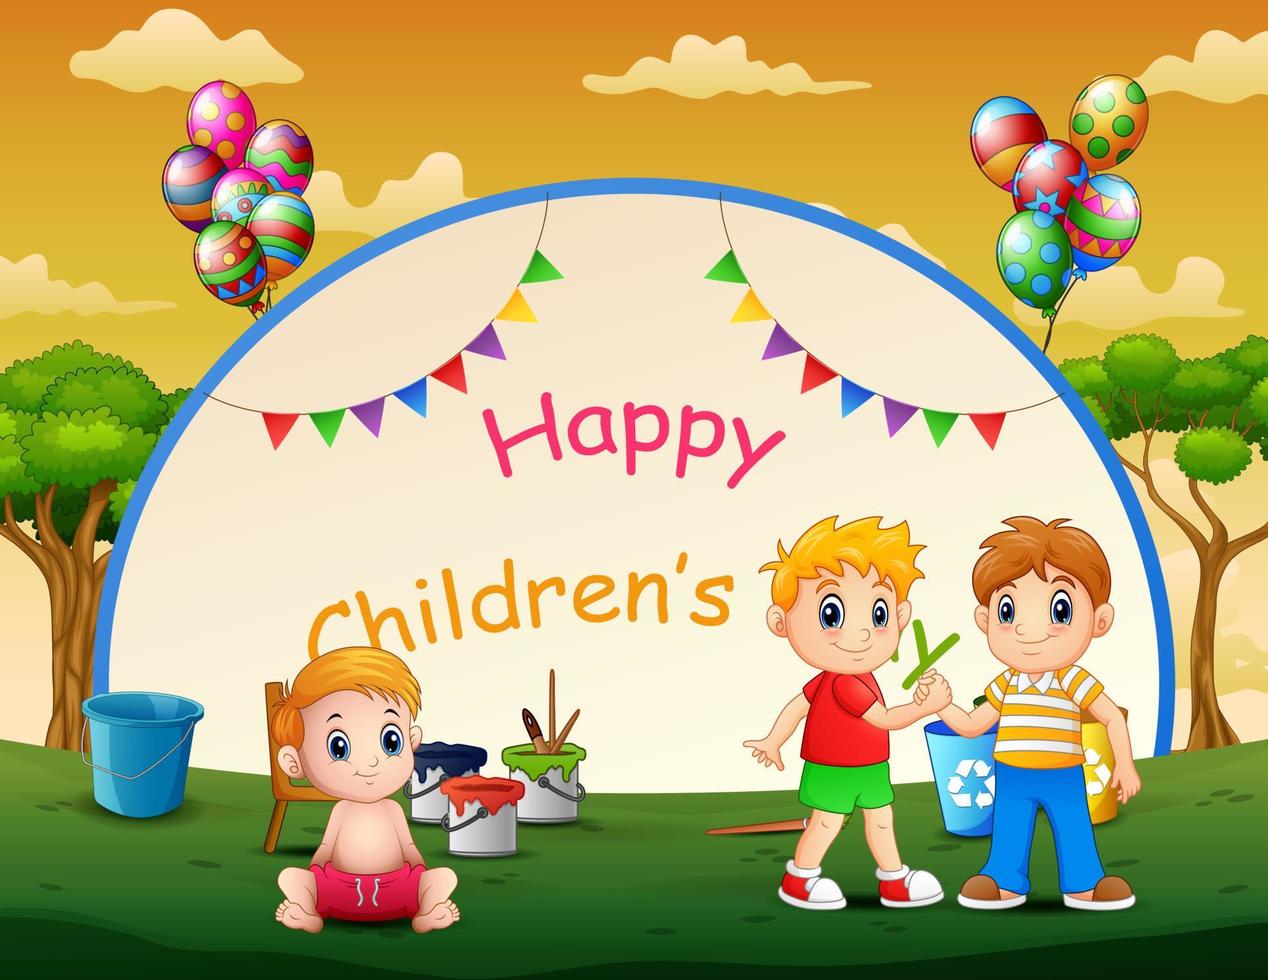 Happy Children's Day for International Children Celebration vector